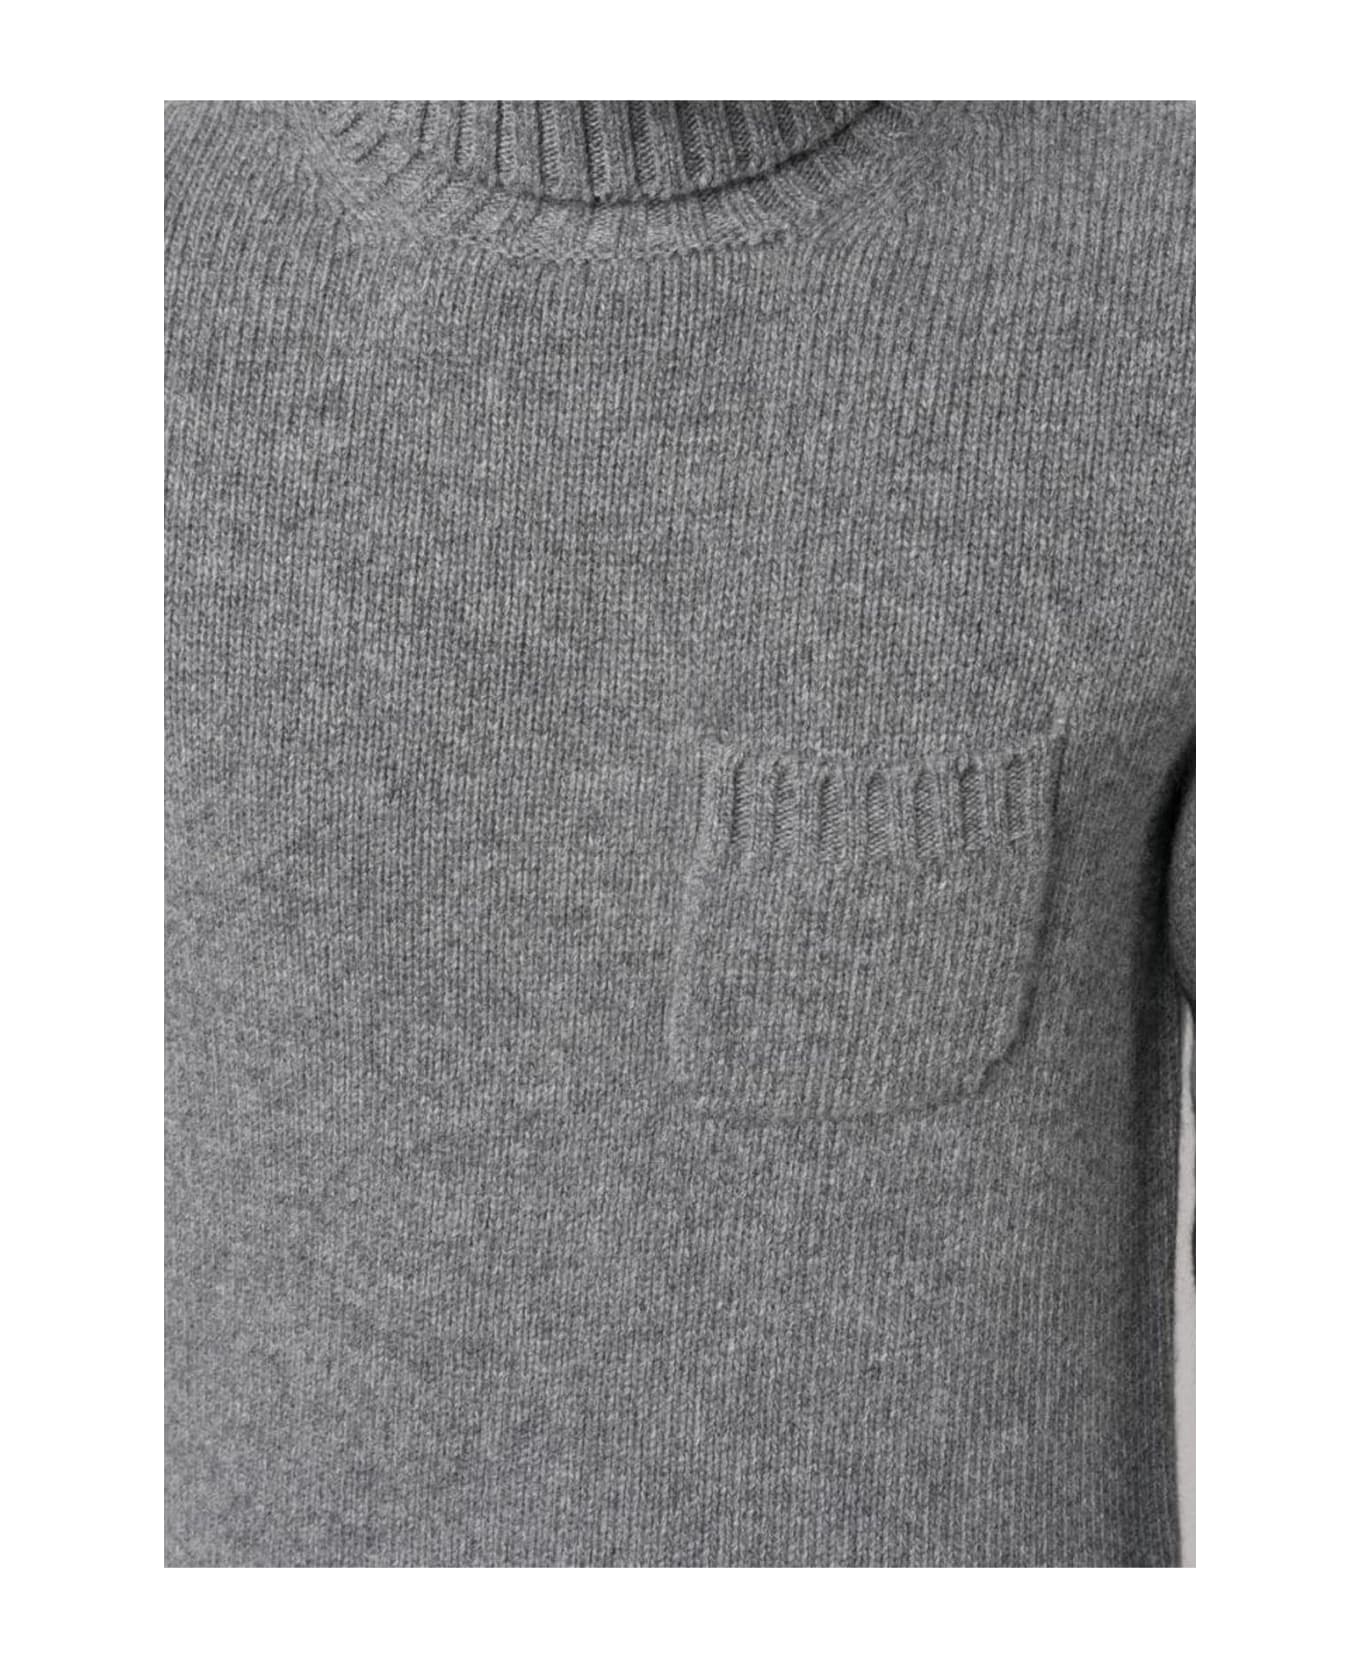 Fedeli Grey Wool-cashmere Blend Jumper Sweater - GRIGIO SCURO